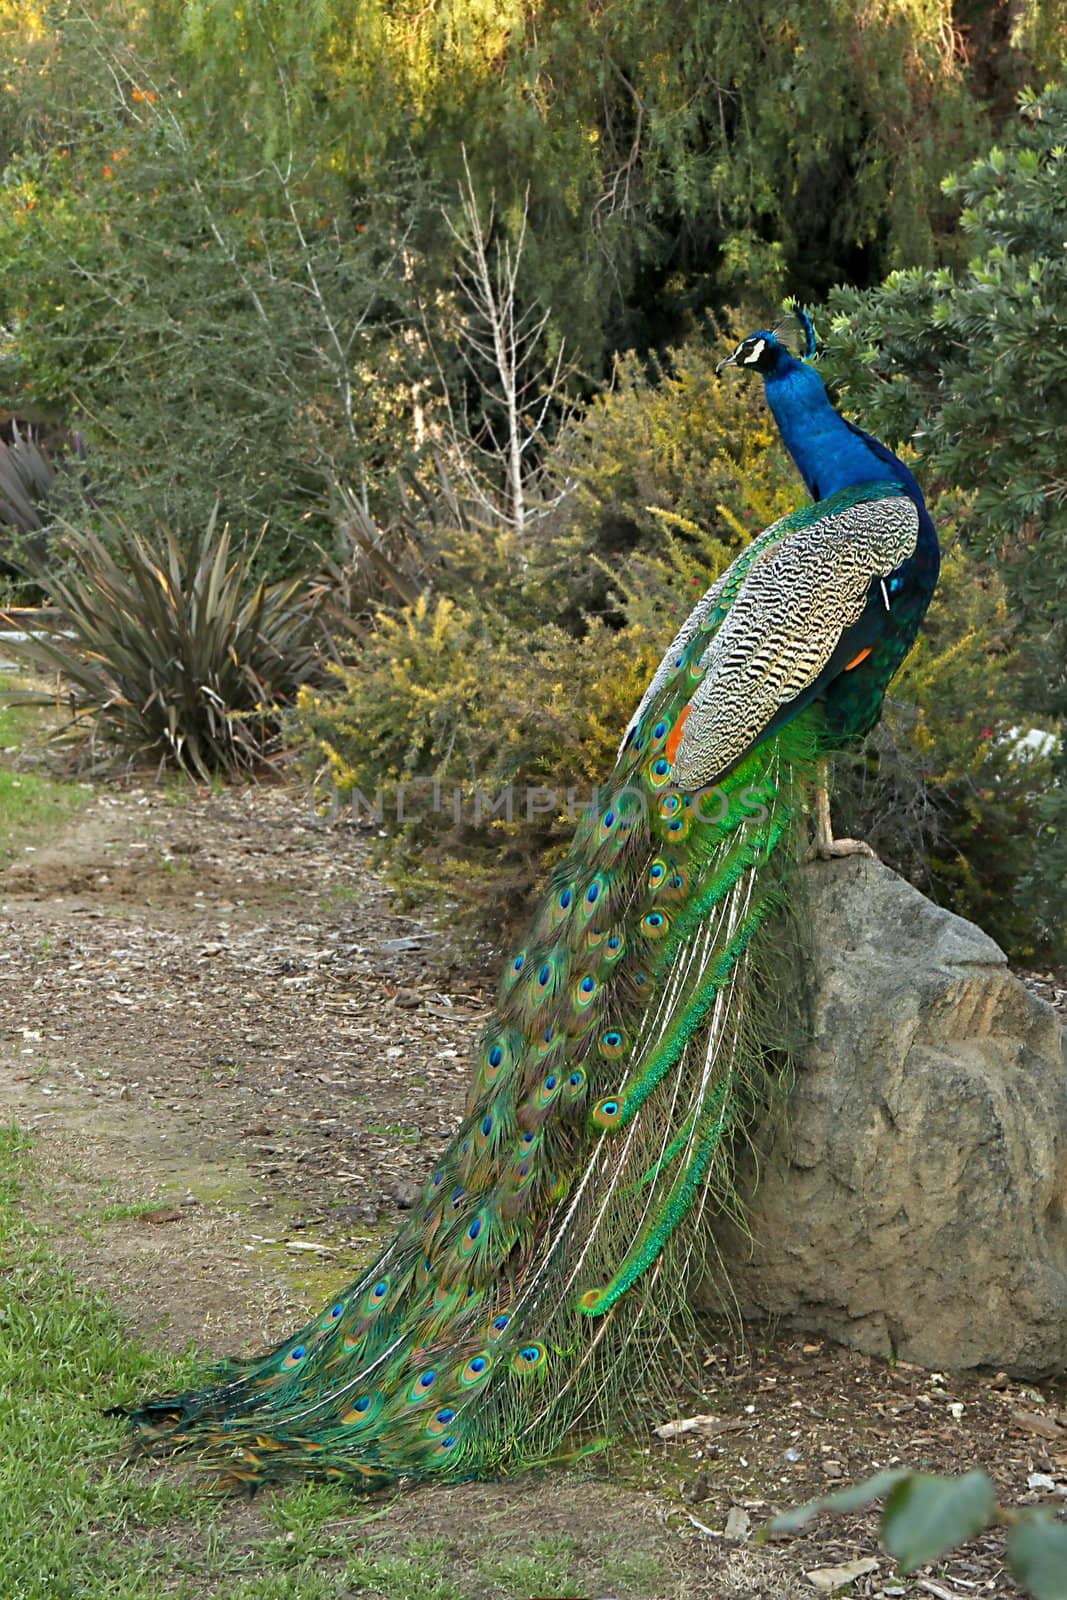 Peacock Male Bird Posing on a Rock